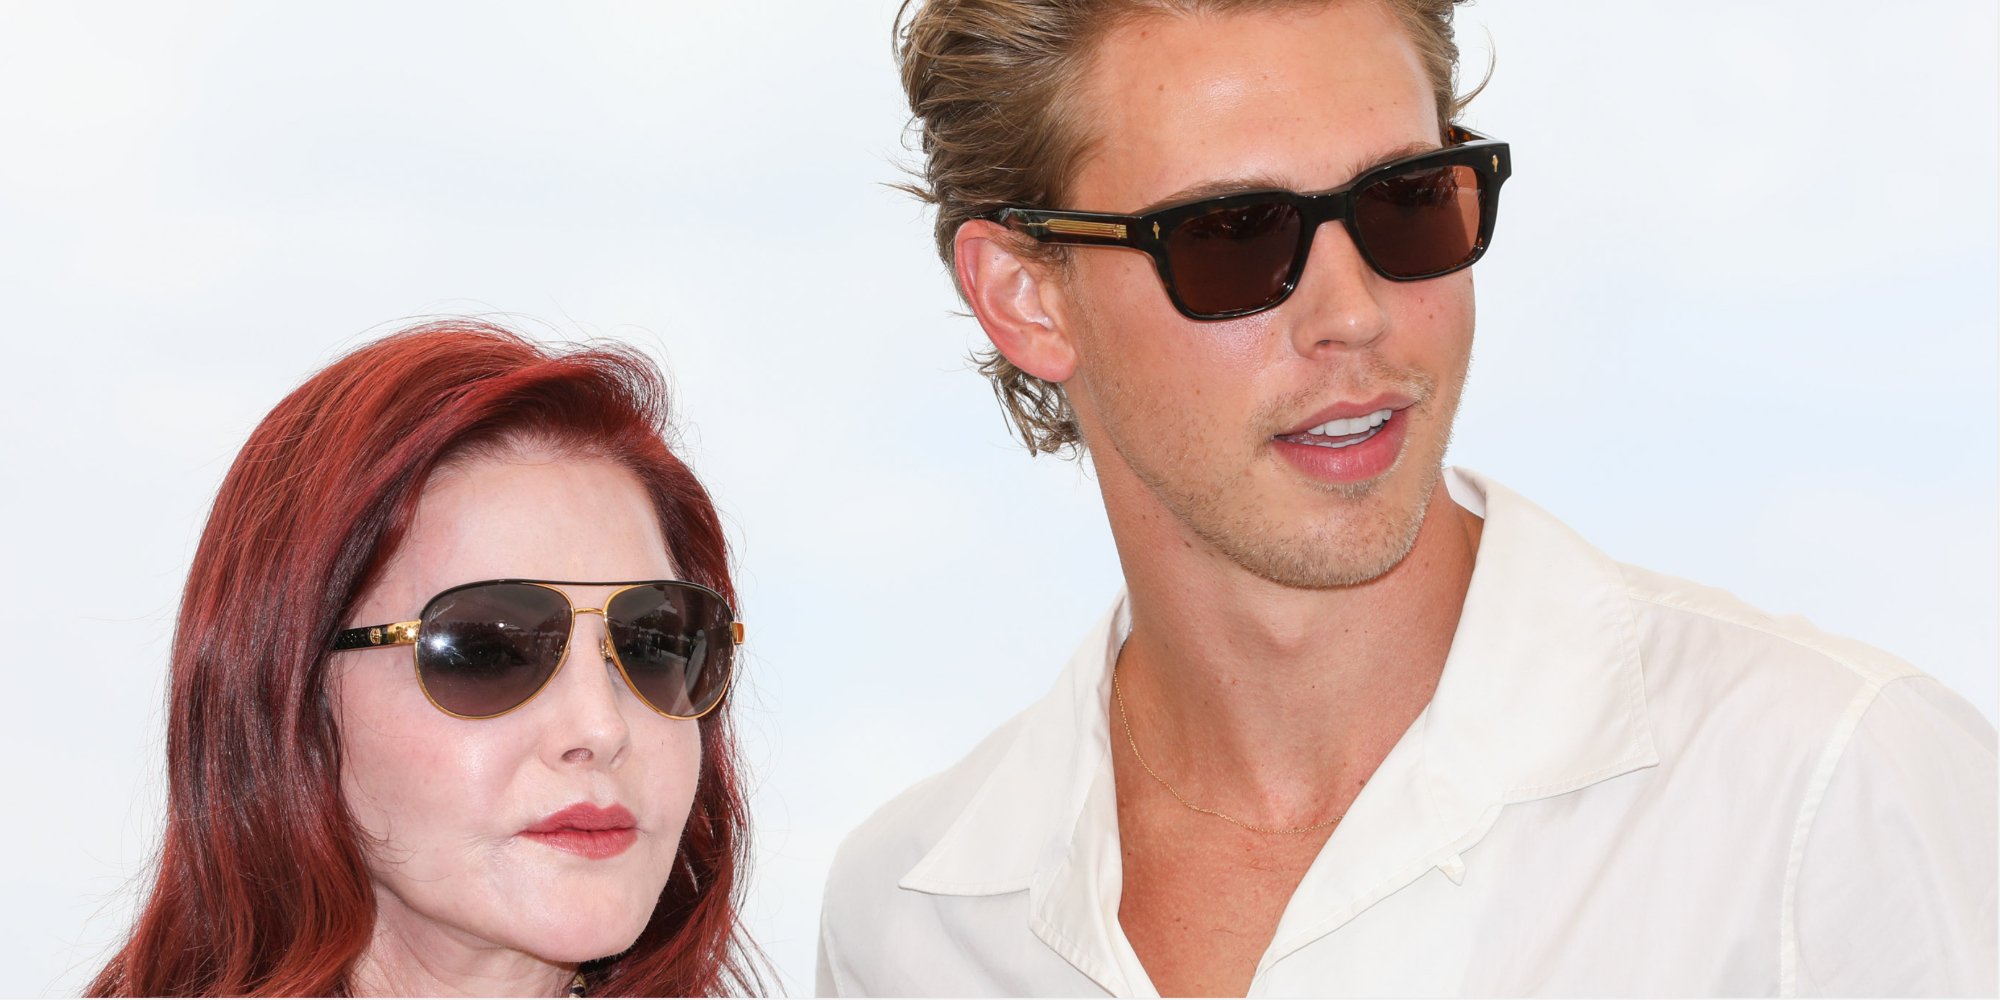 Priscilla Presley and Austin Butler promote the film 'Elvis' at the Cannes Film Festival.